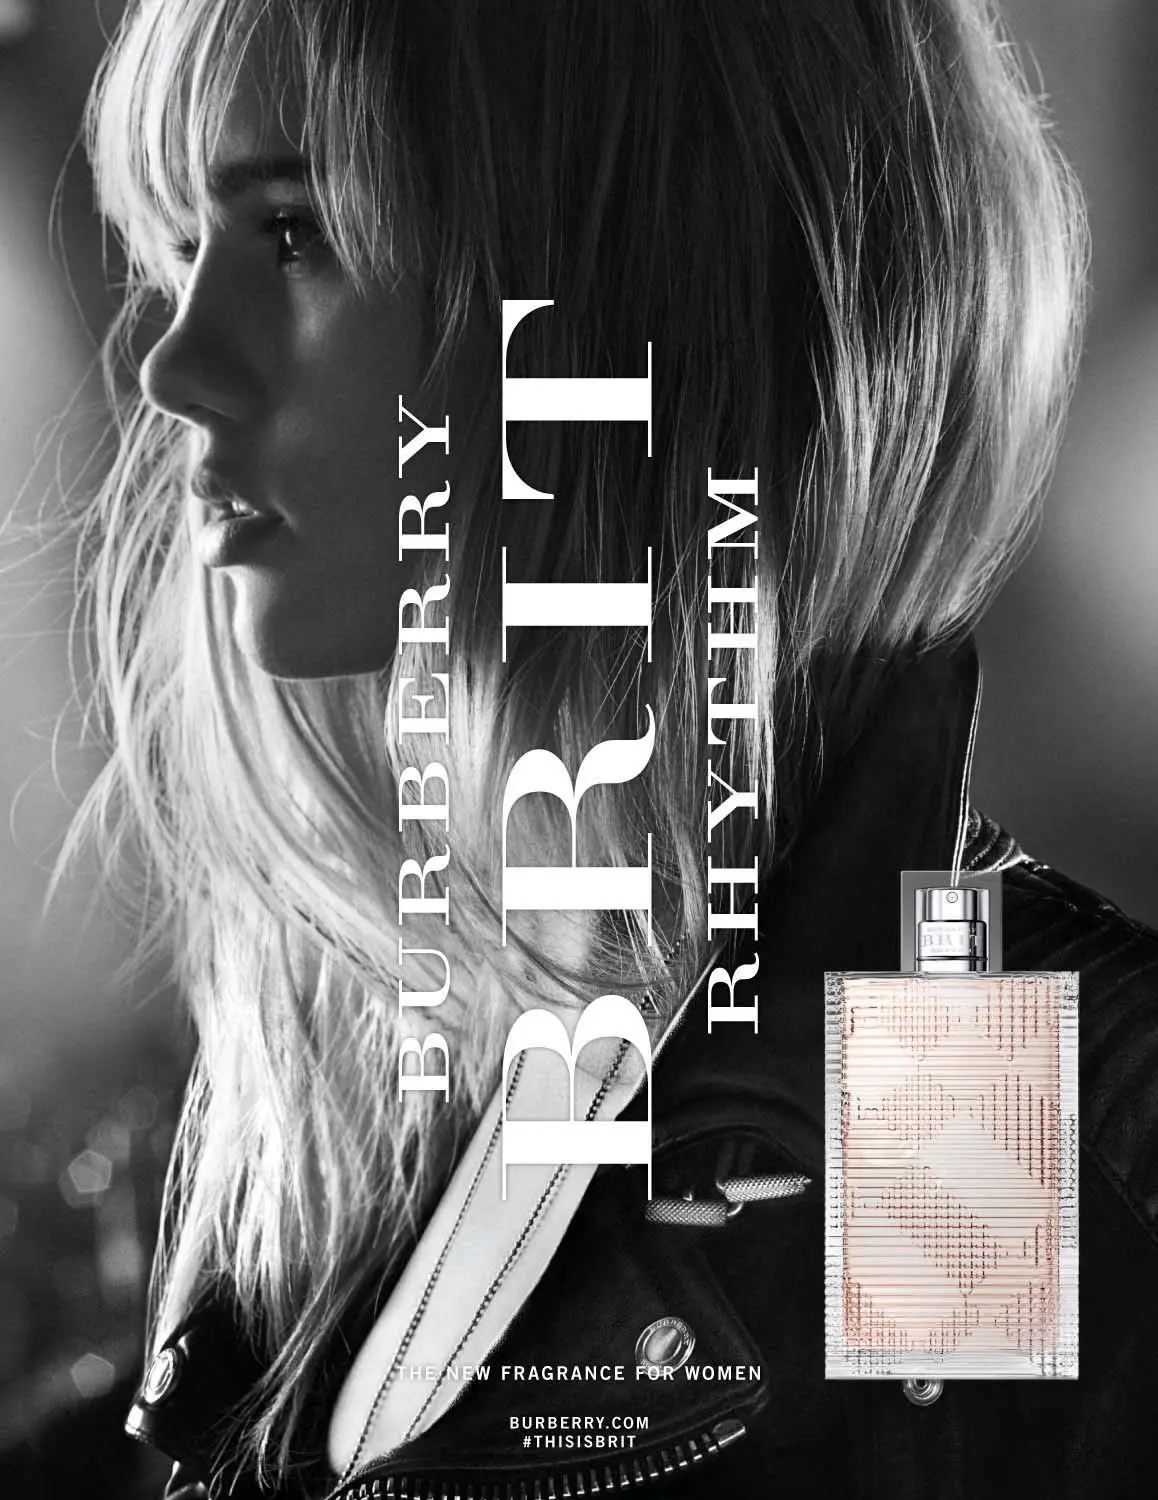 Best Lavender Perfumes
Burberry Brit Rhythm